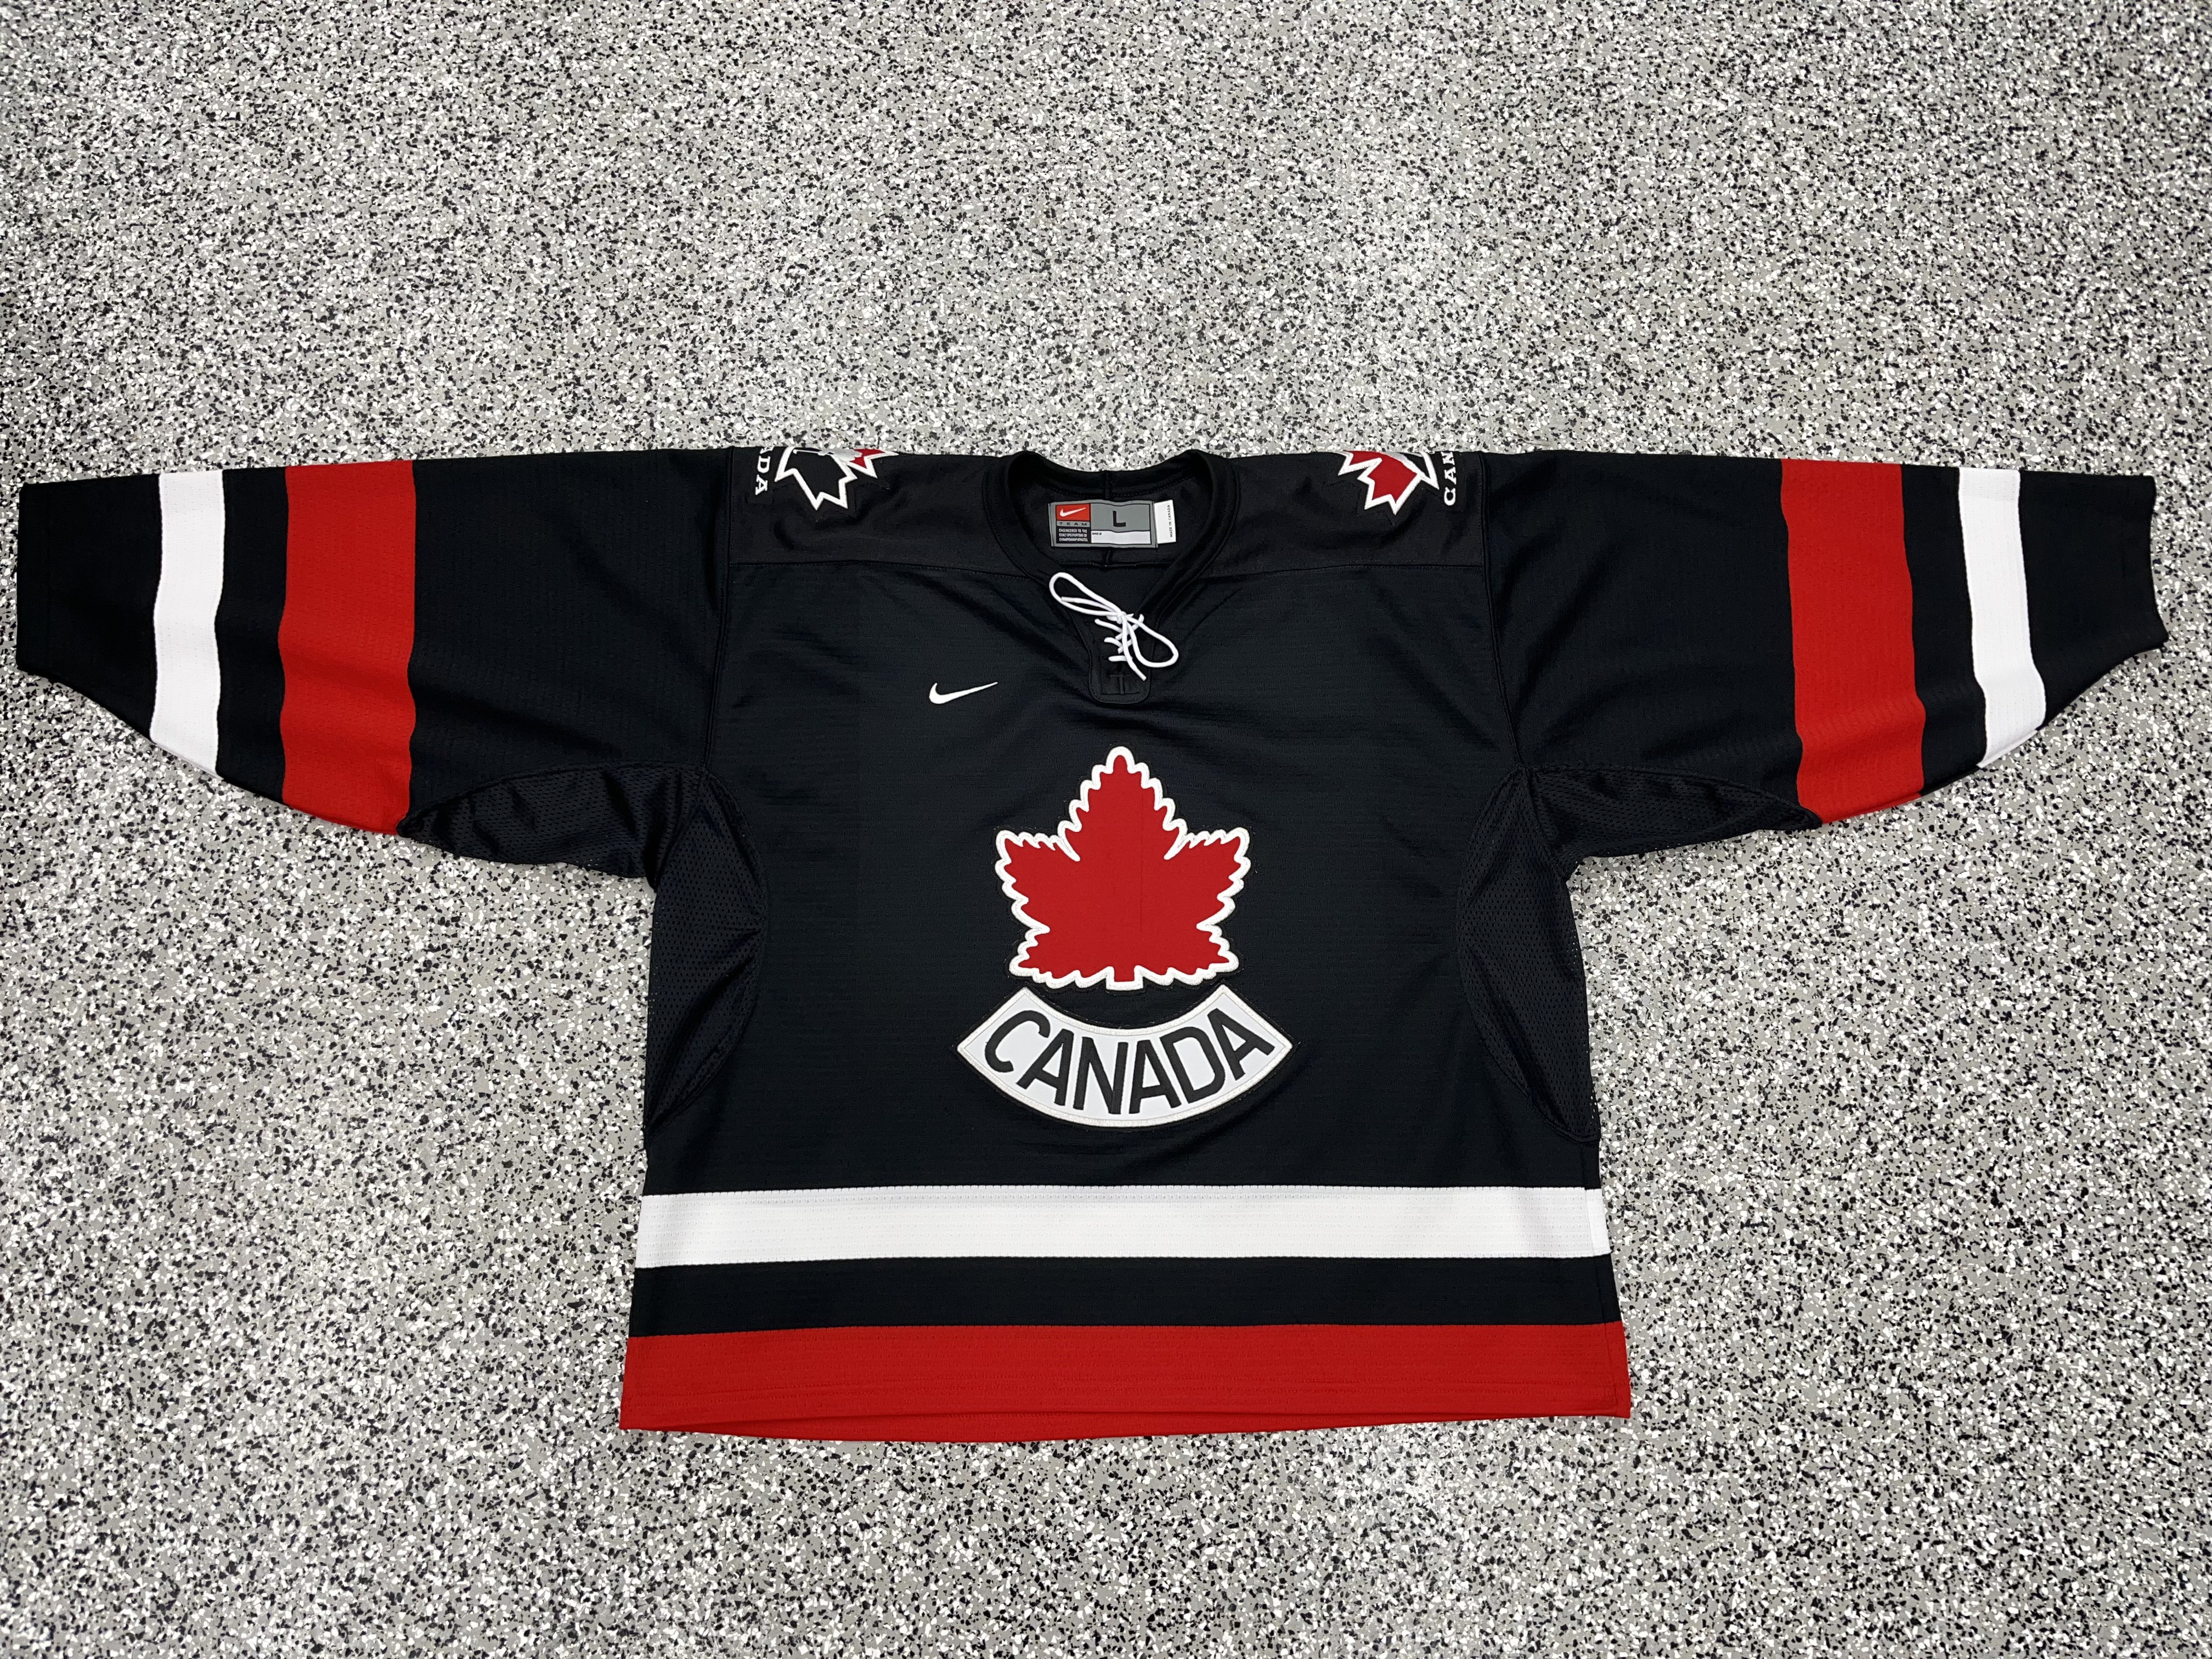 Team Canada hockey 2014 jerseys? - Non-Ski Gabber 